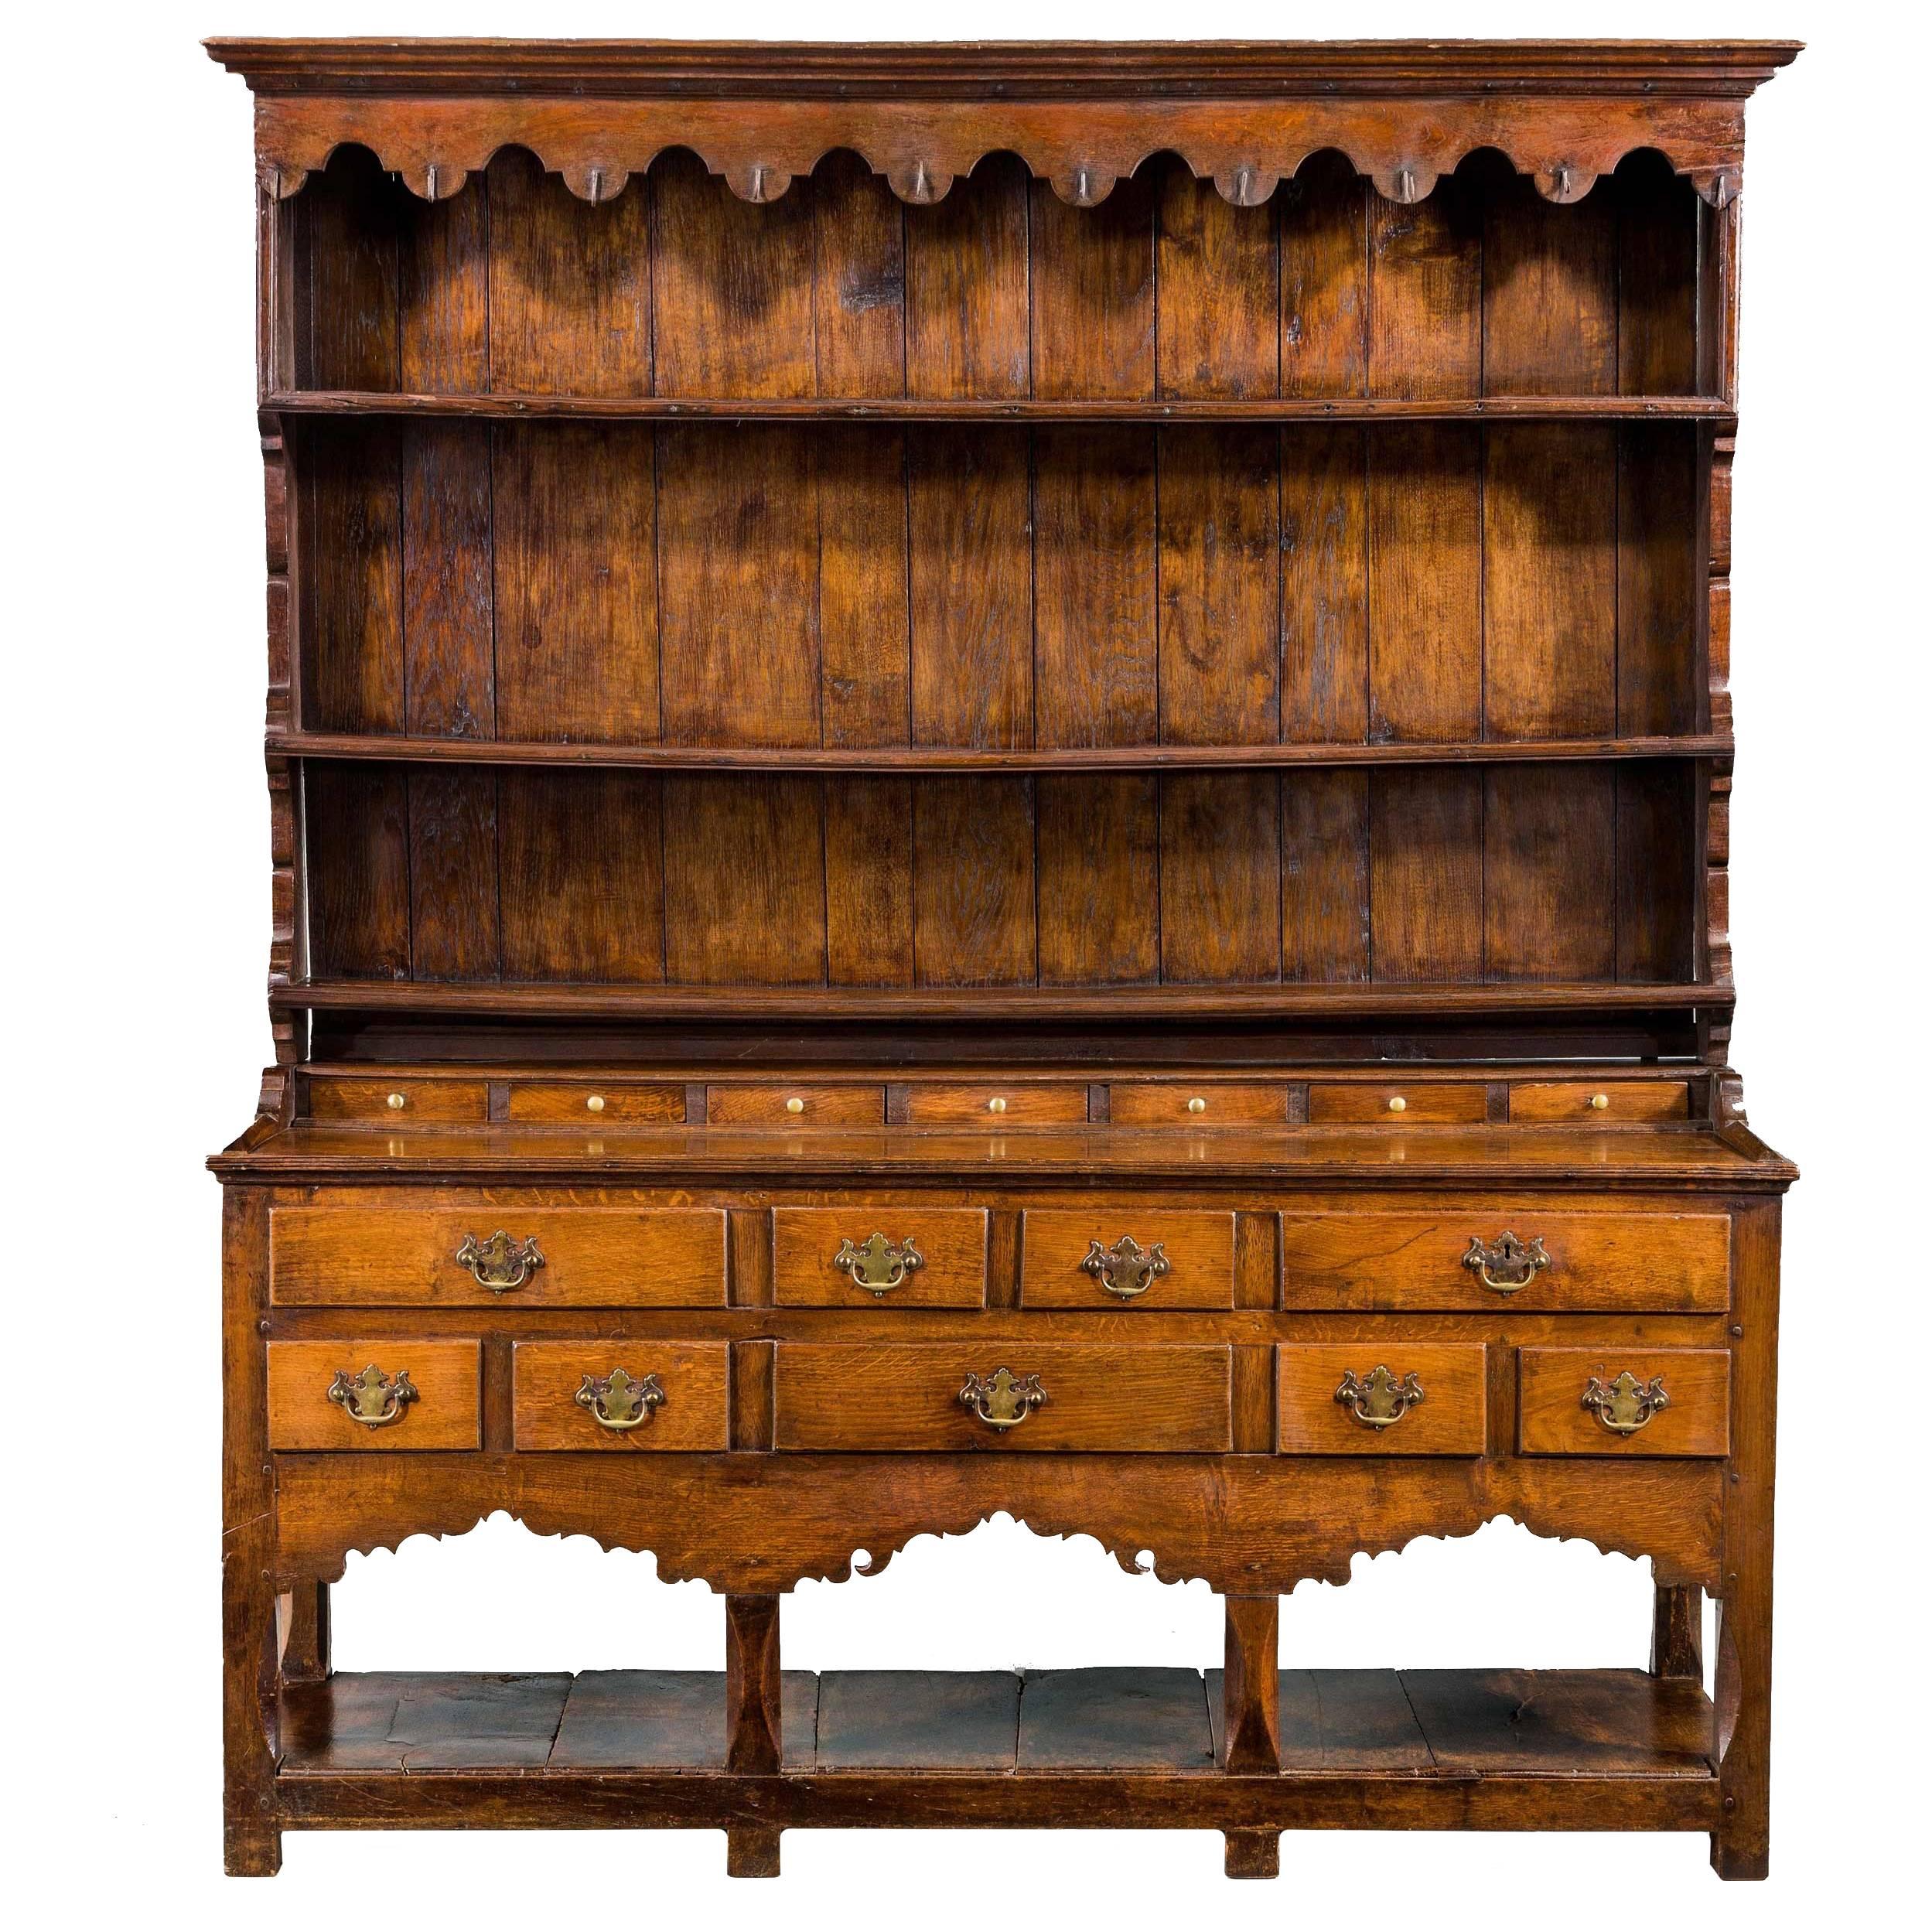 18th Century Period Dresser and Rack